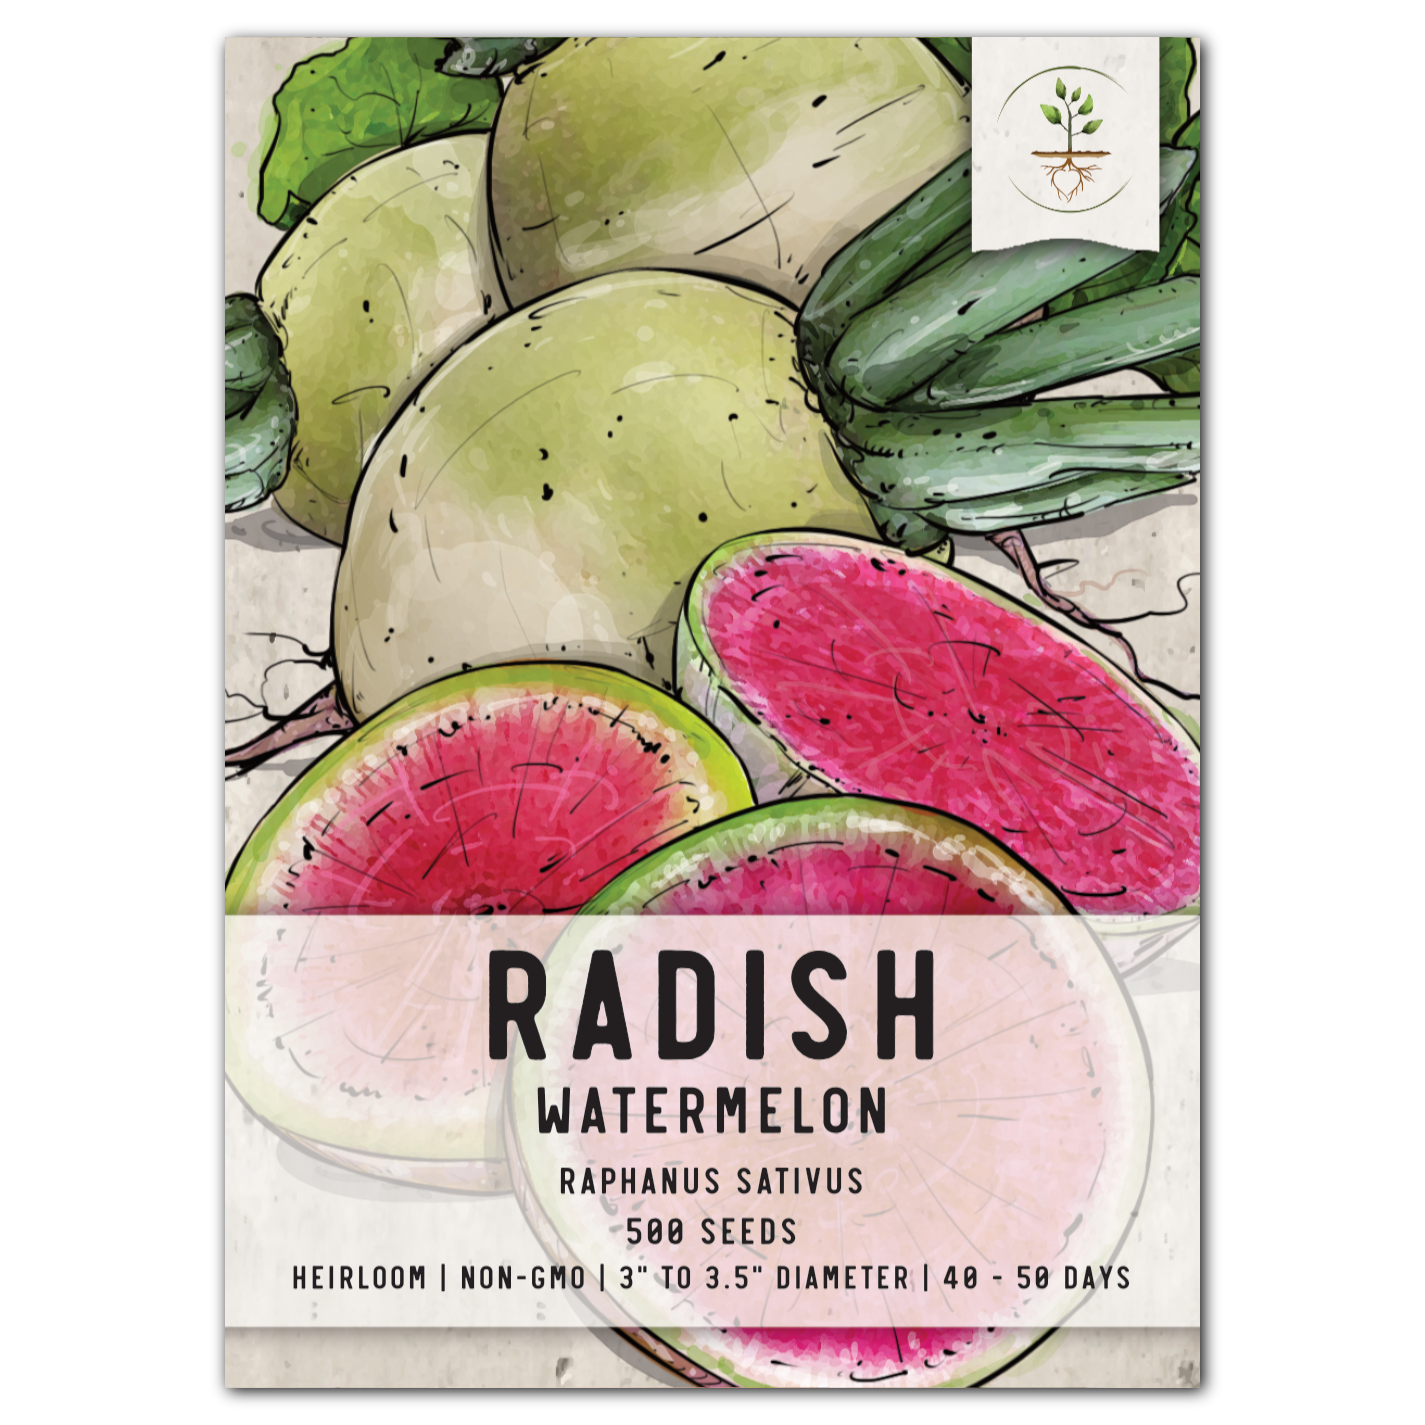 watermelon radish seeds for planting